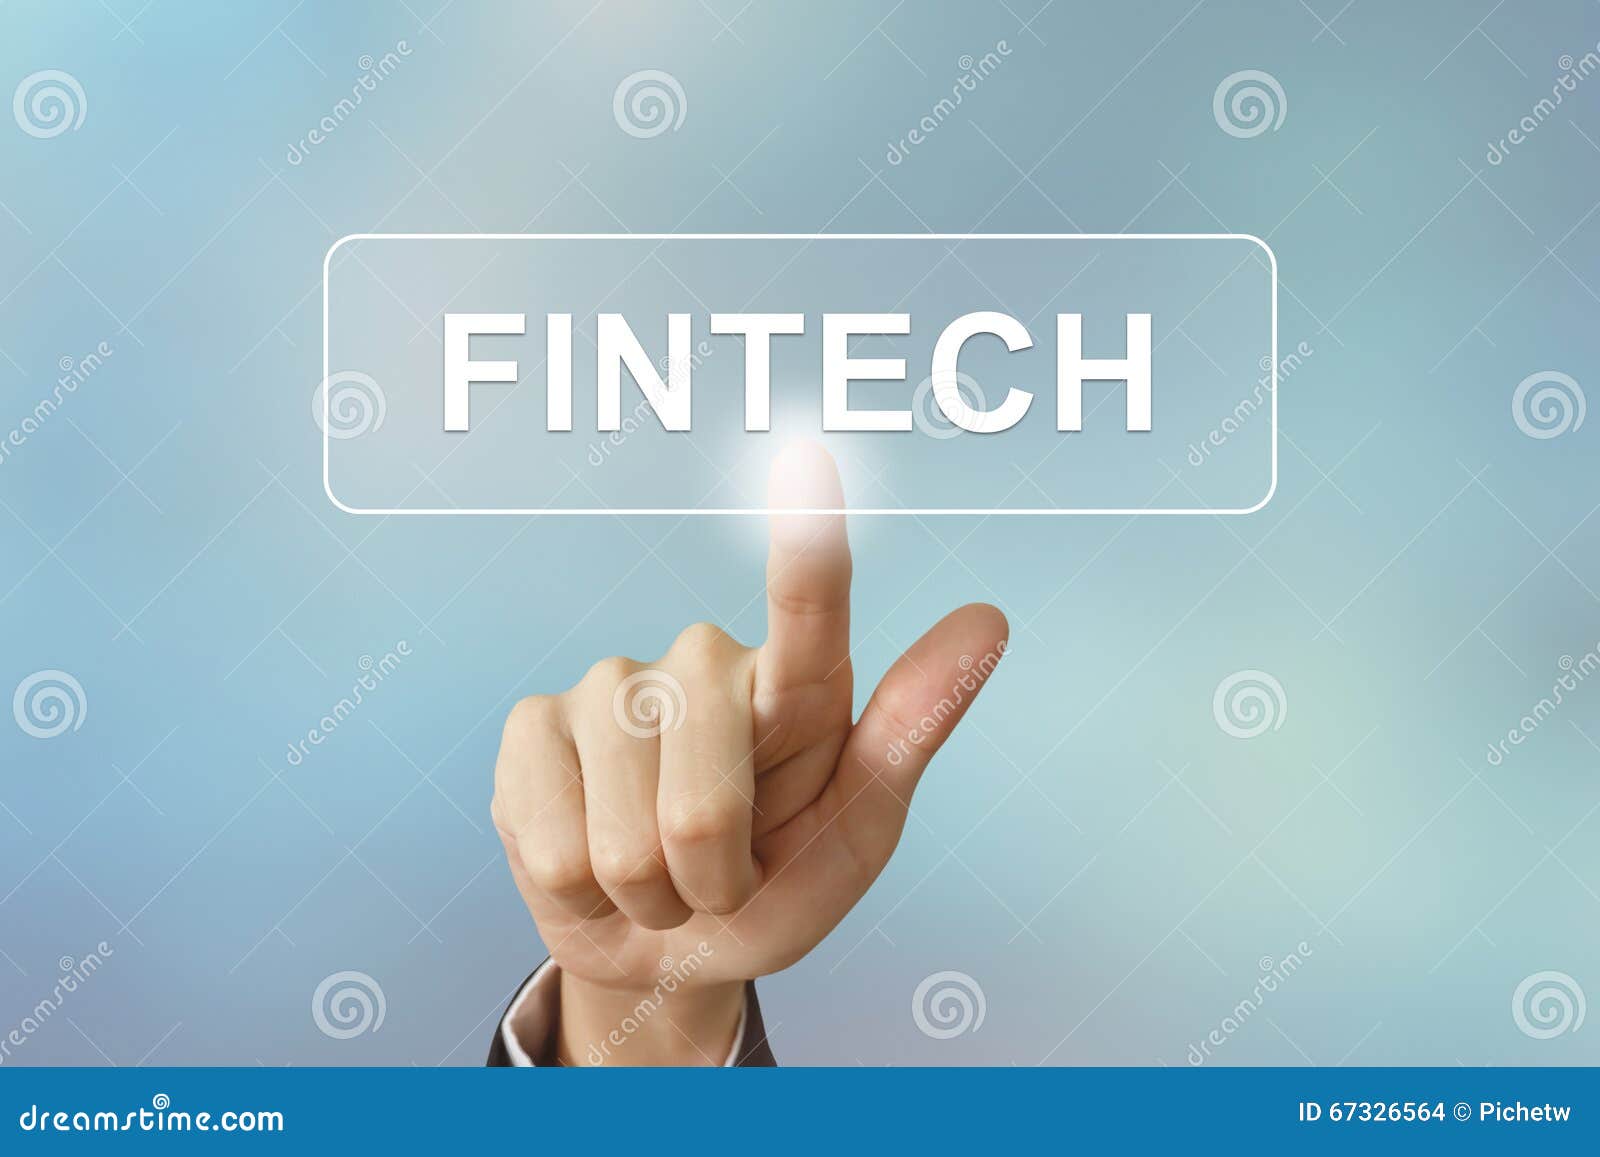 business hand clicking fintech or financial technology button on